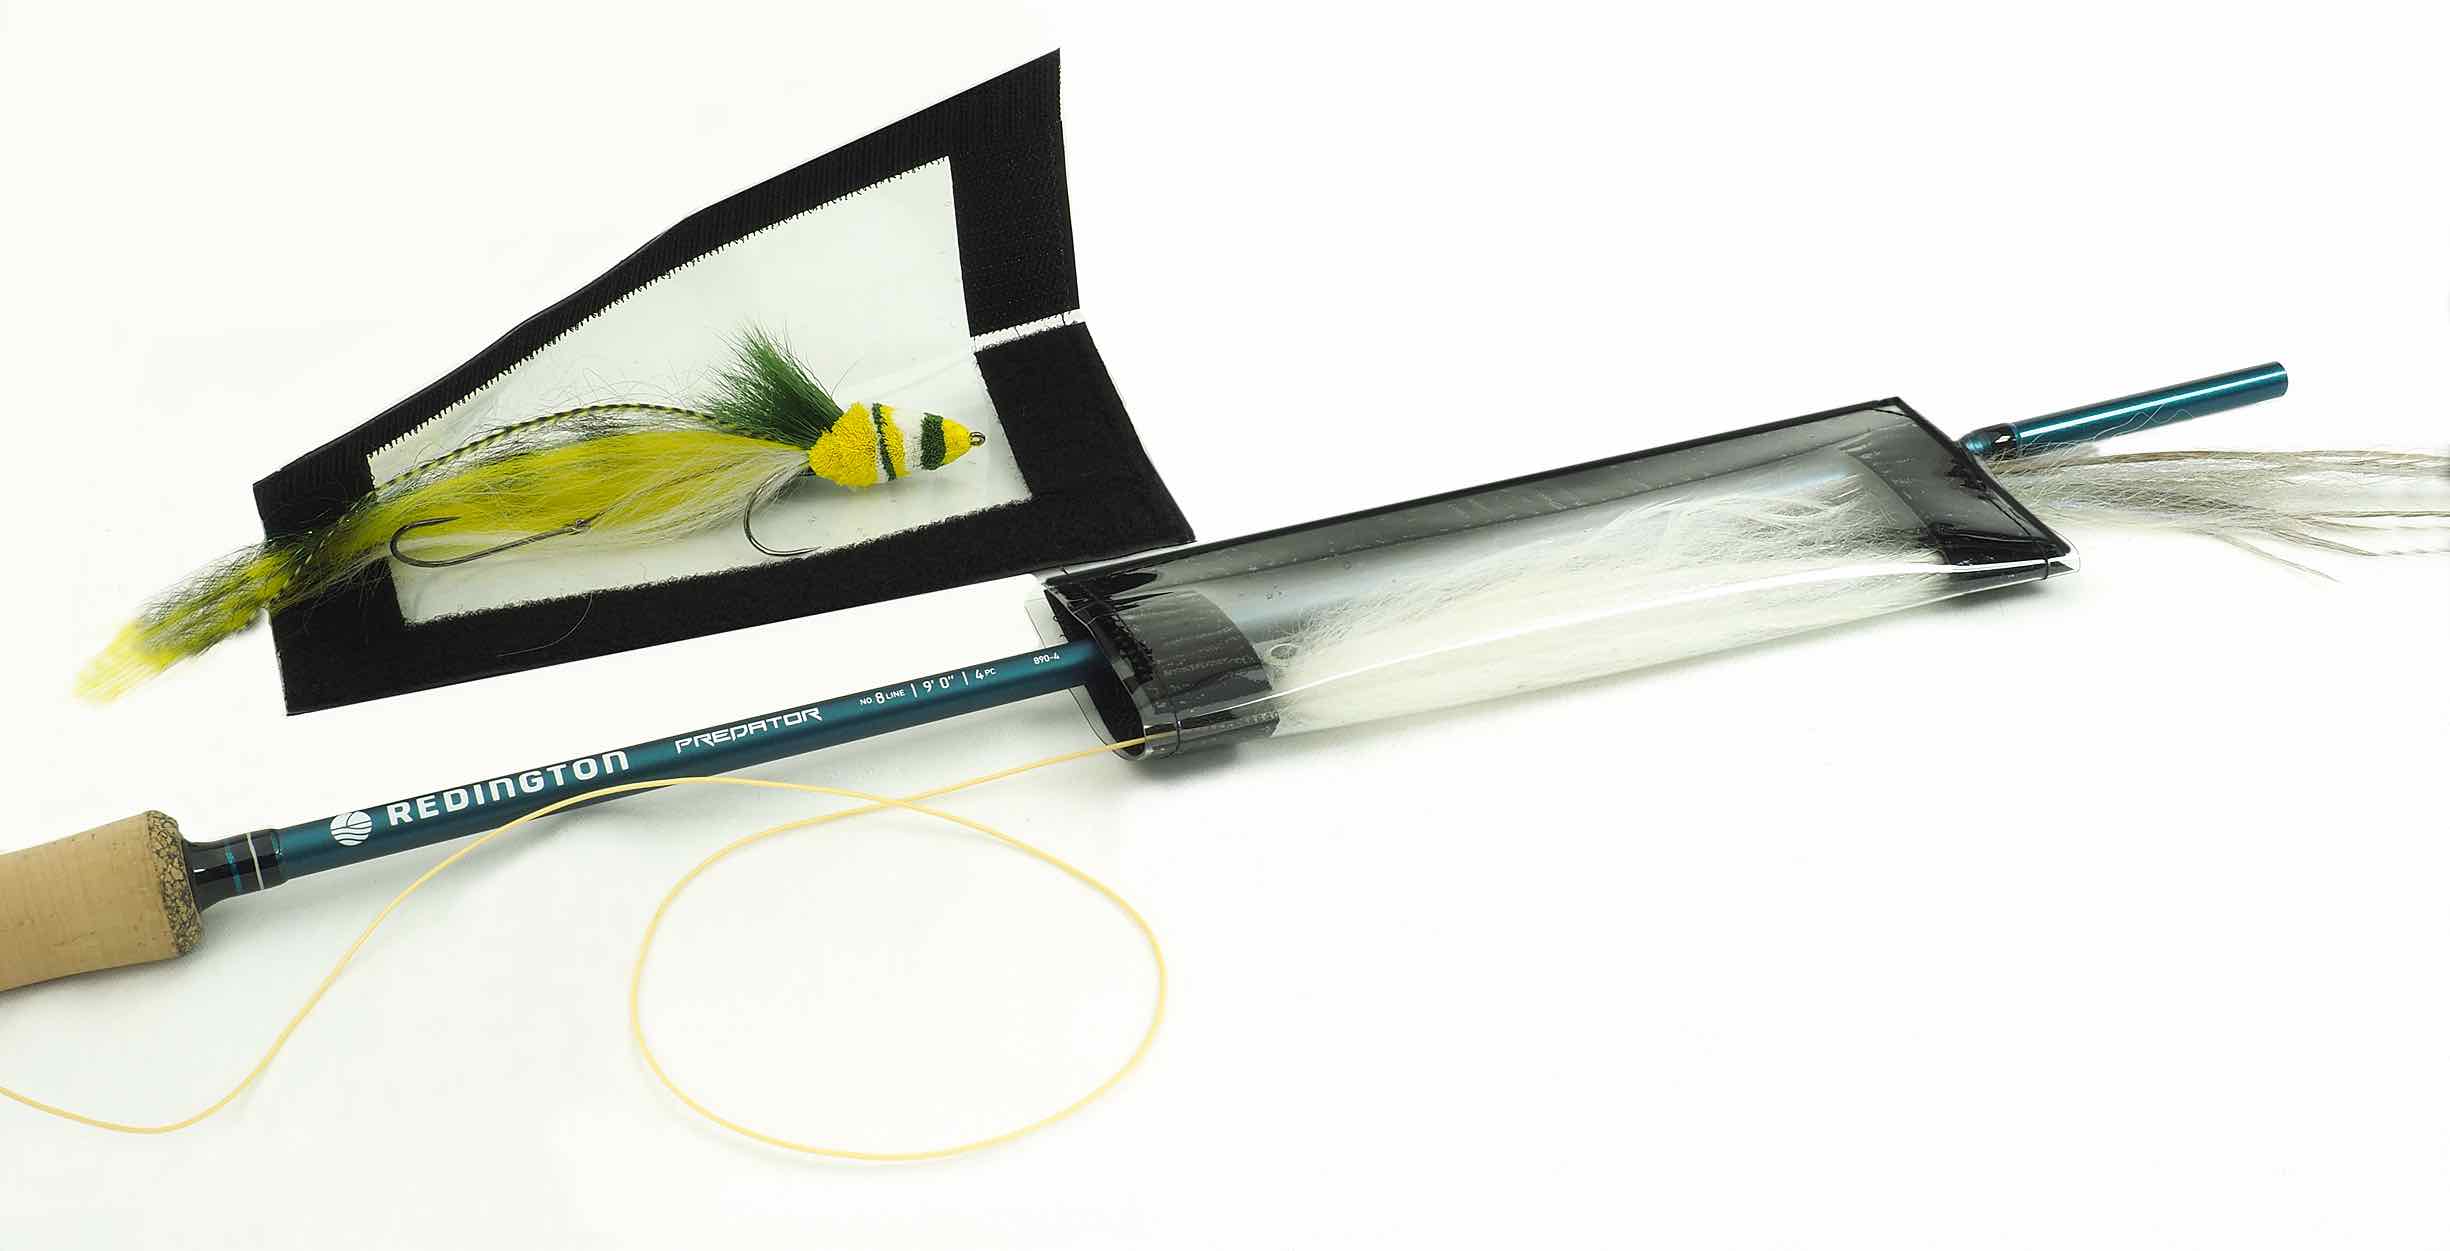 Custom TFC Hook Resistant Durable PVC Clear Fly Wrap